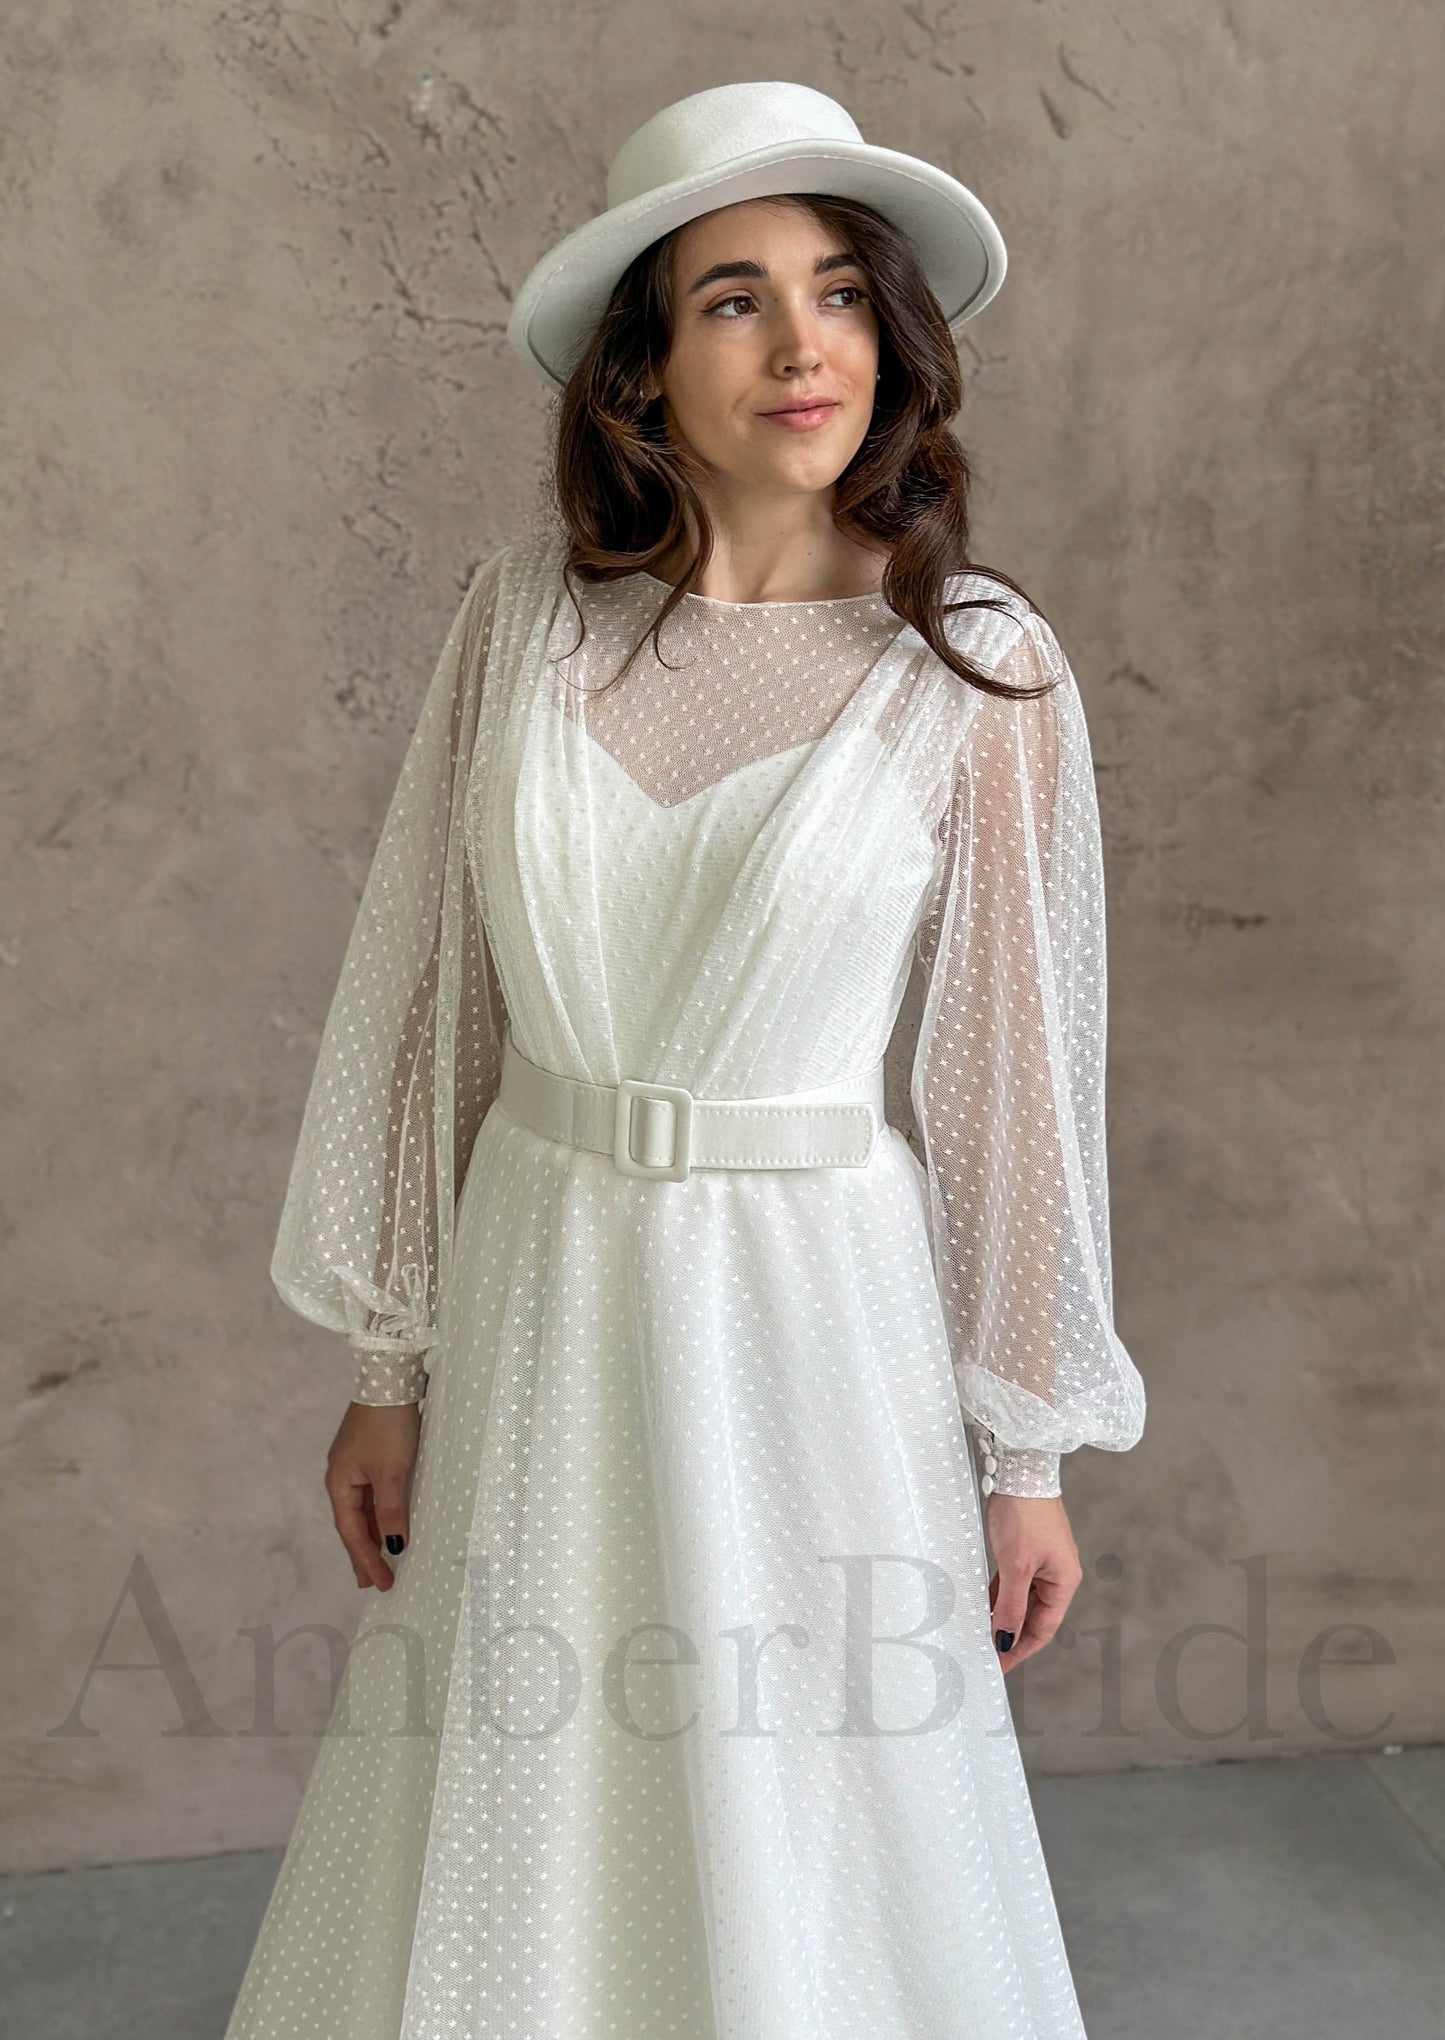 Boho A Line Tulle Wedding Dress with Sheer Bishop Sleeves and Polka Dot Design